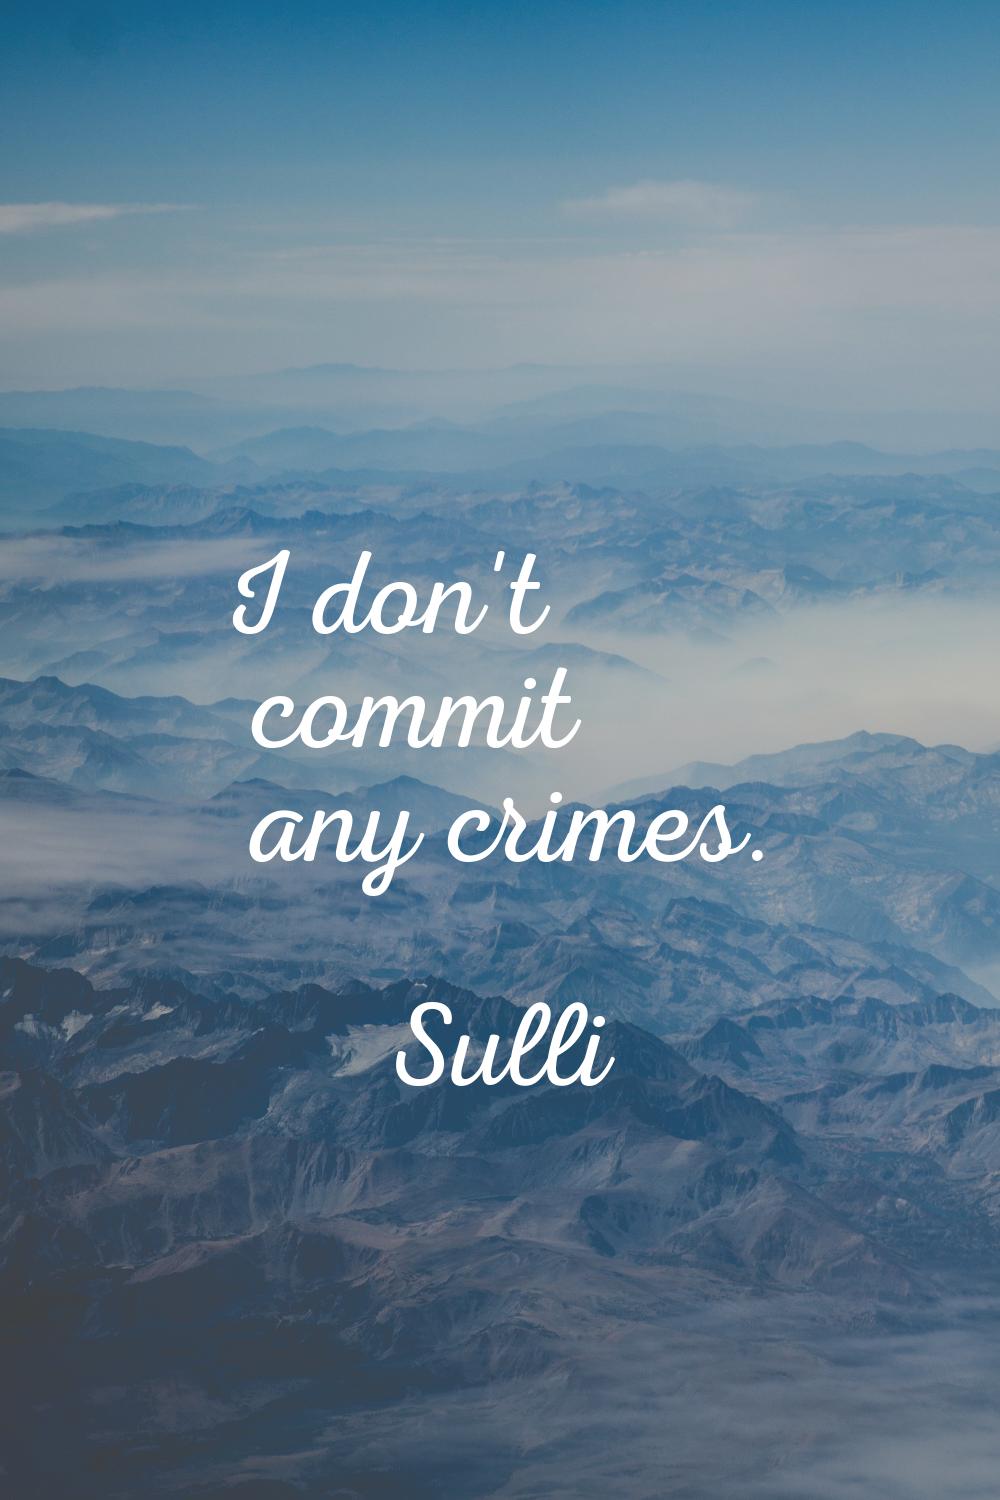 I don't commit any crimes.